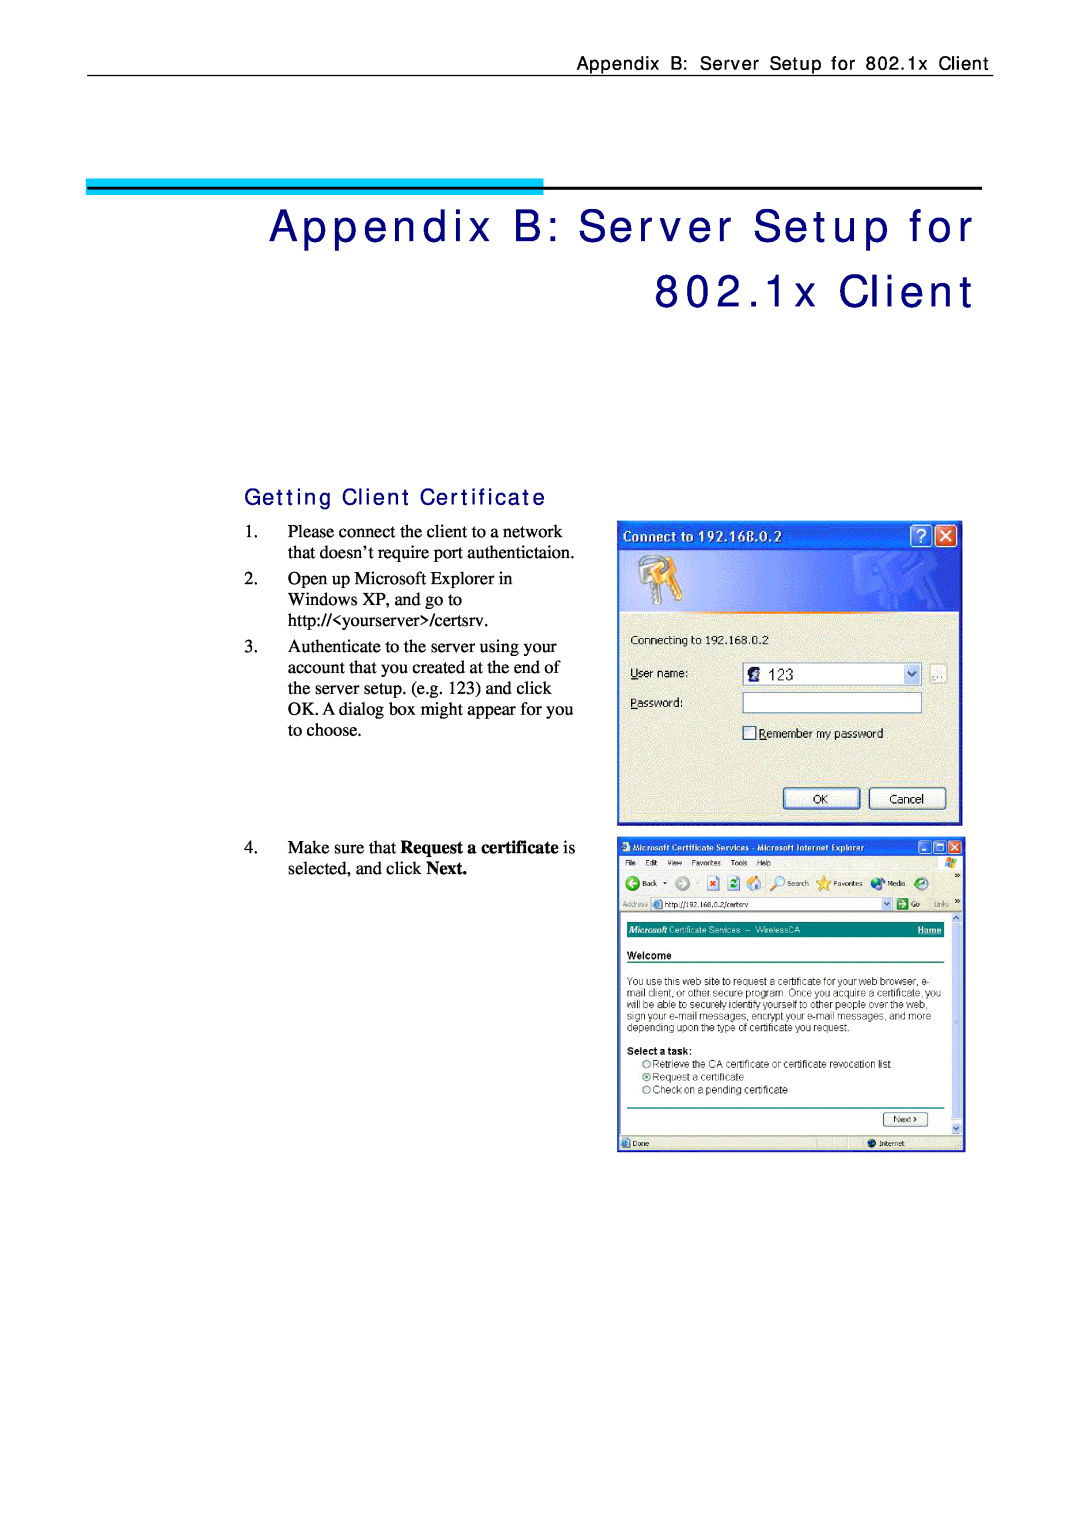 Siemens CL-010-I manual Appendix B Server Setup for 802.1x Client, Getting Client Certificate 